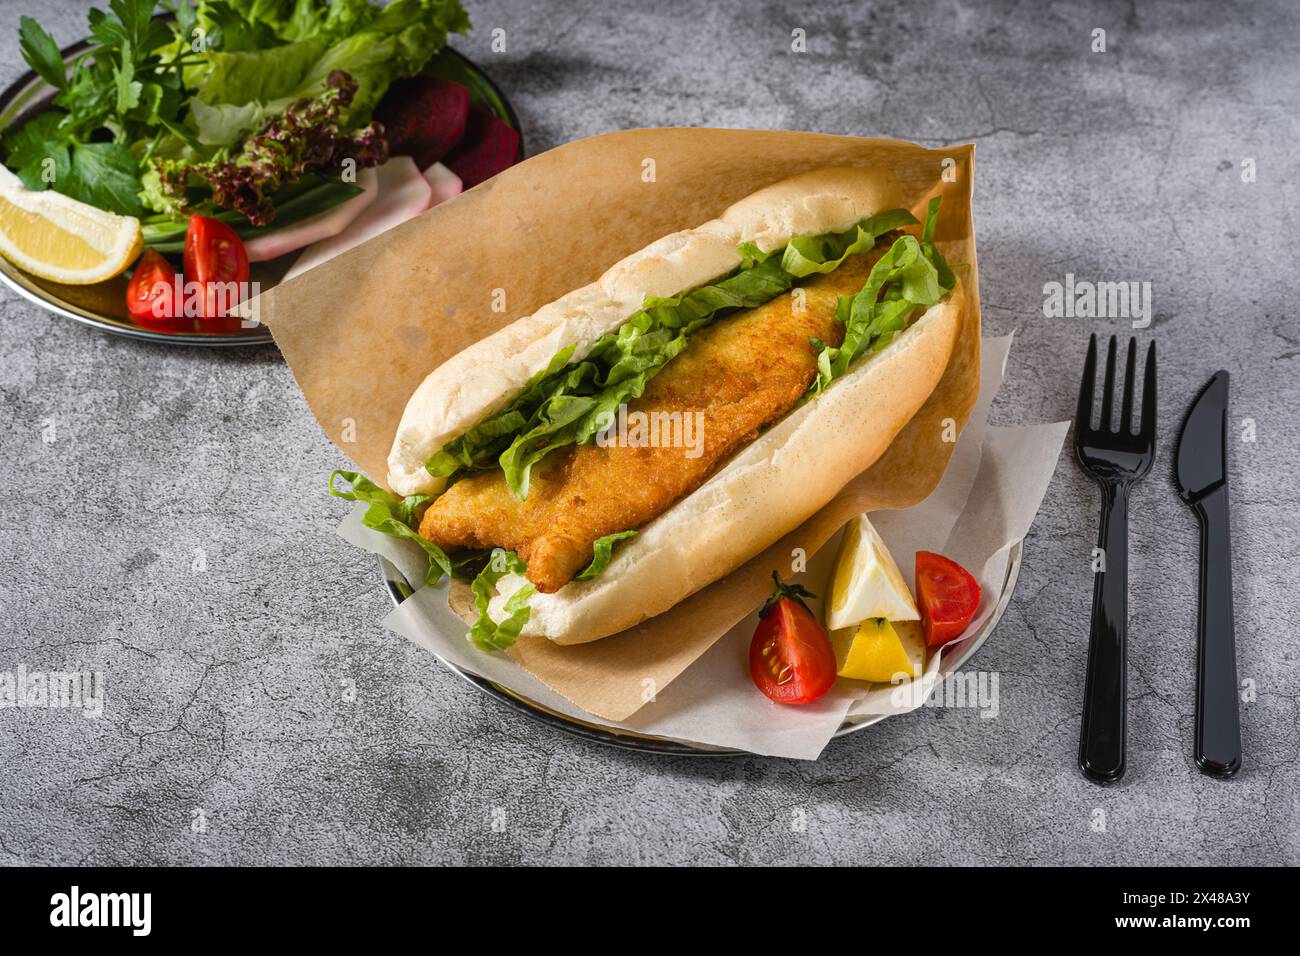 Fried fish sandwich with greens on the stone table. Turkish name Balik Ekmek Stock Photo